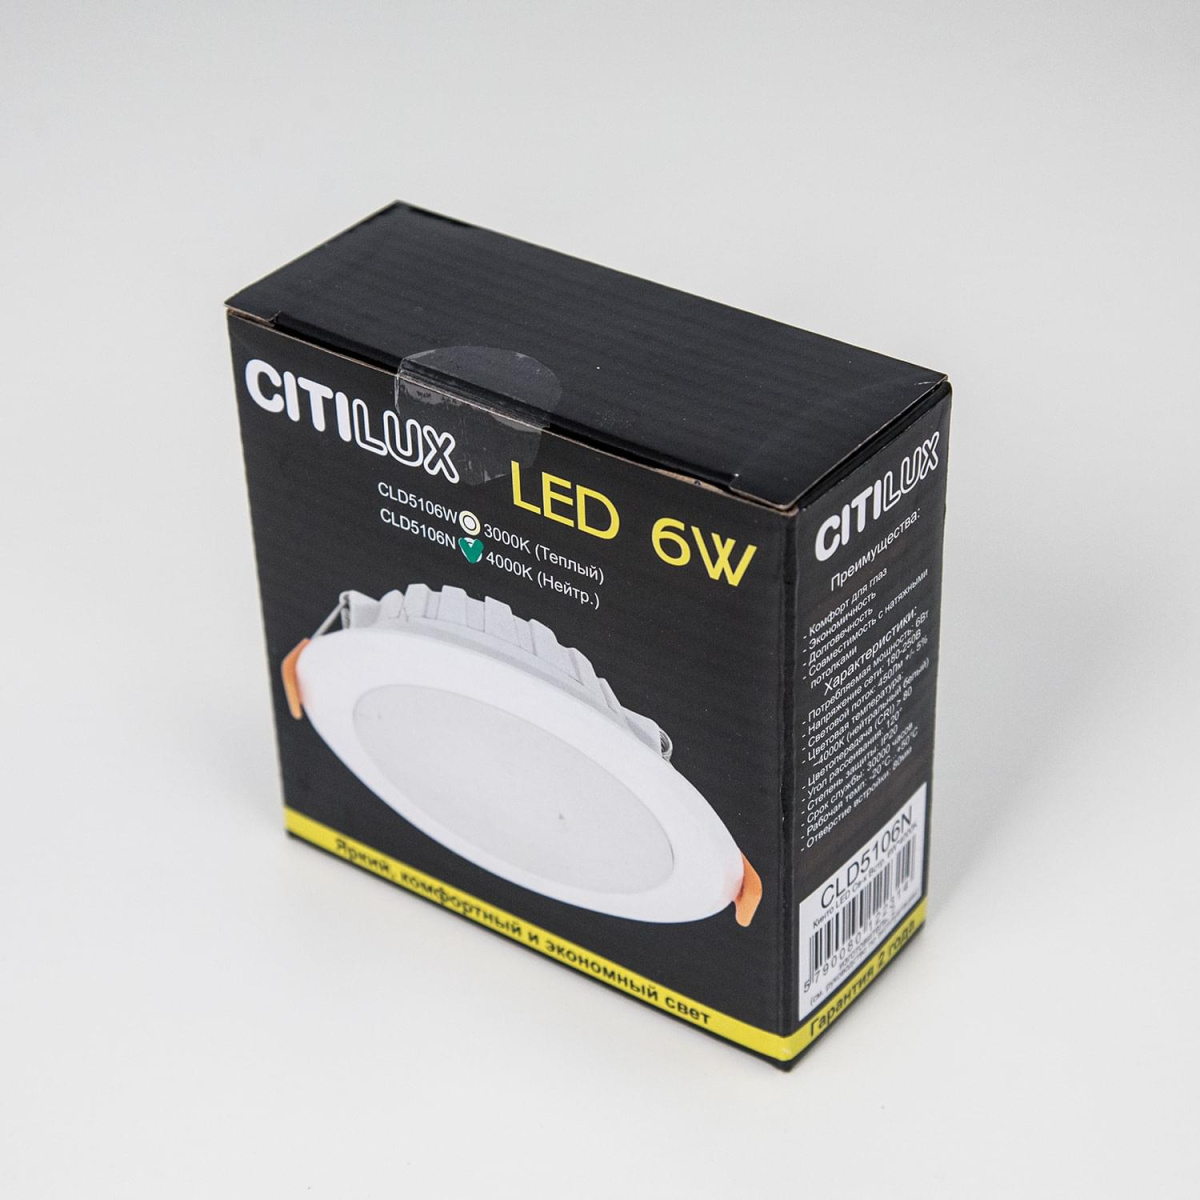 встраиваемый светильник citilux кинто (kinto), артикул CLD5106N